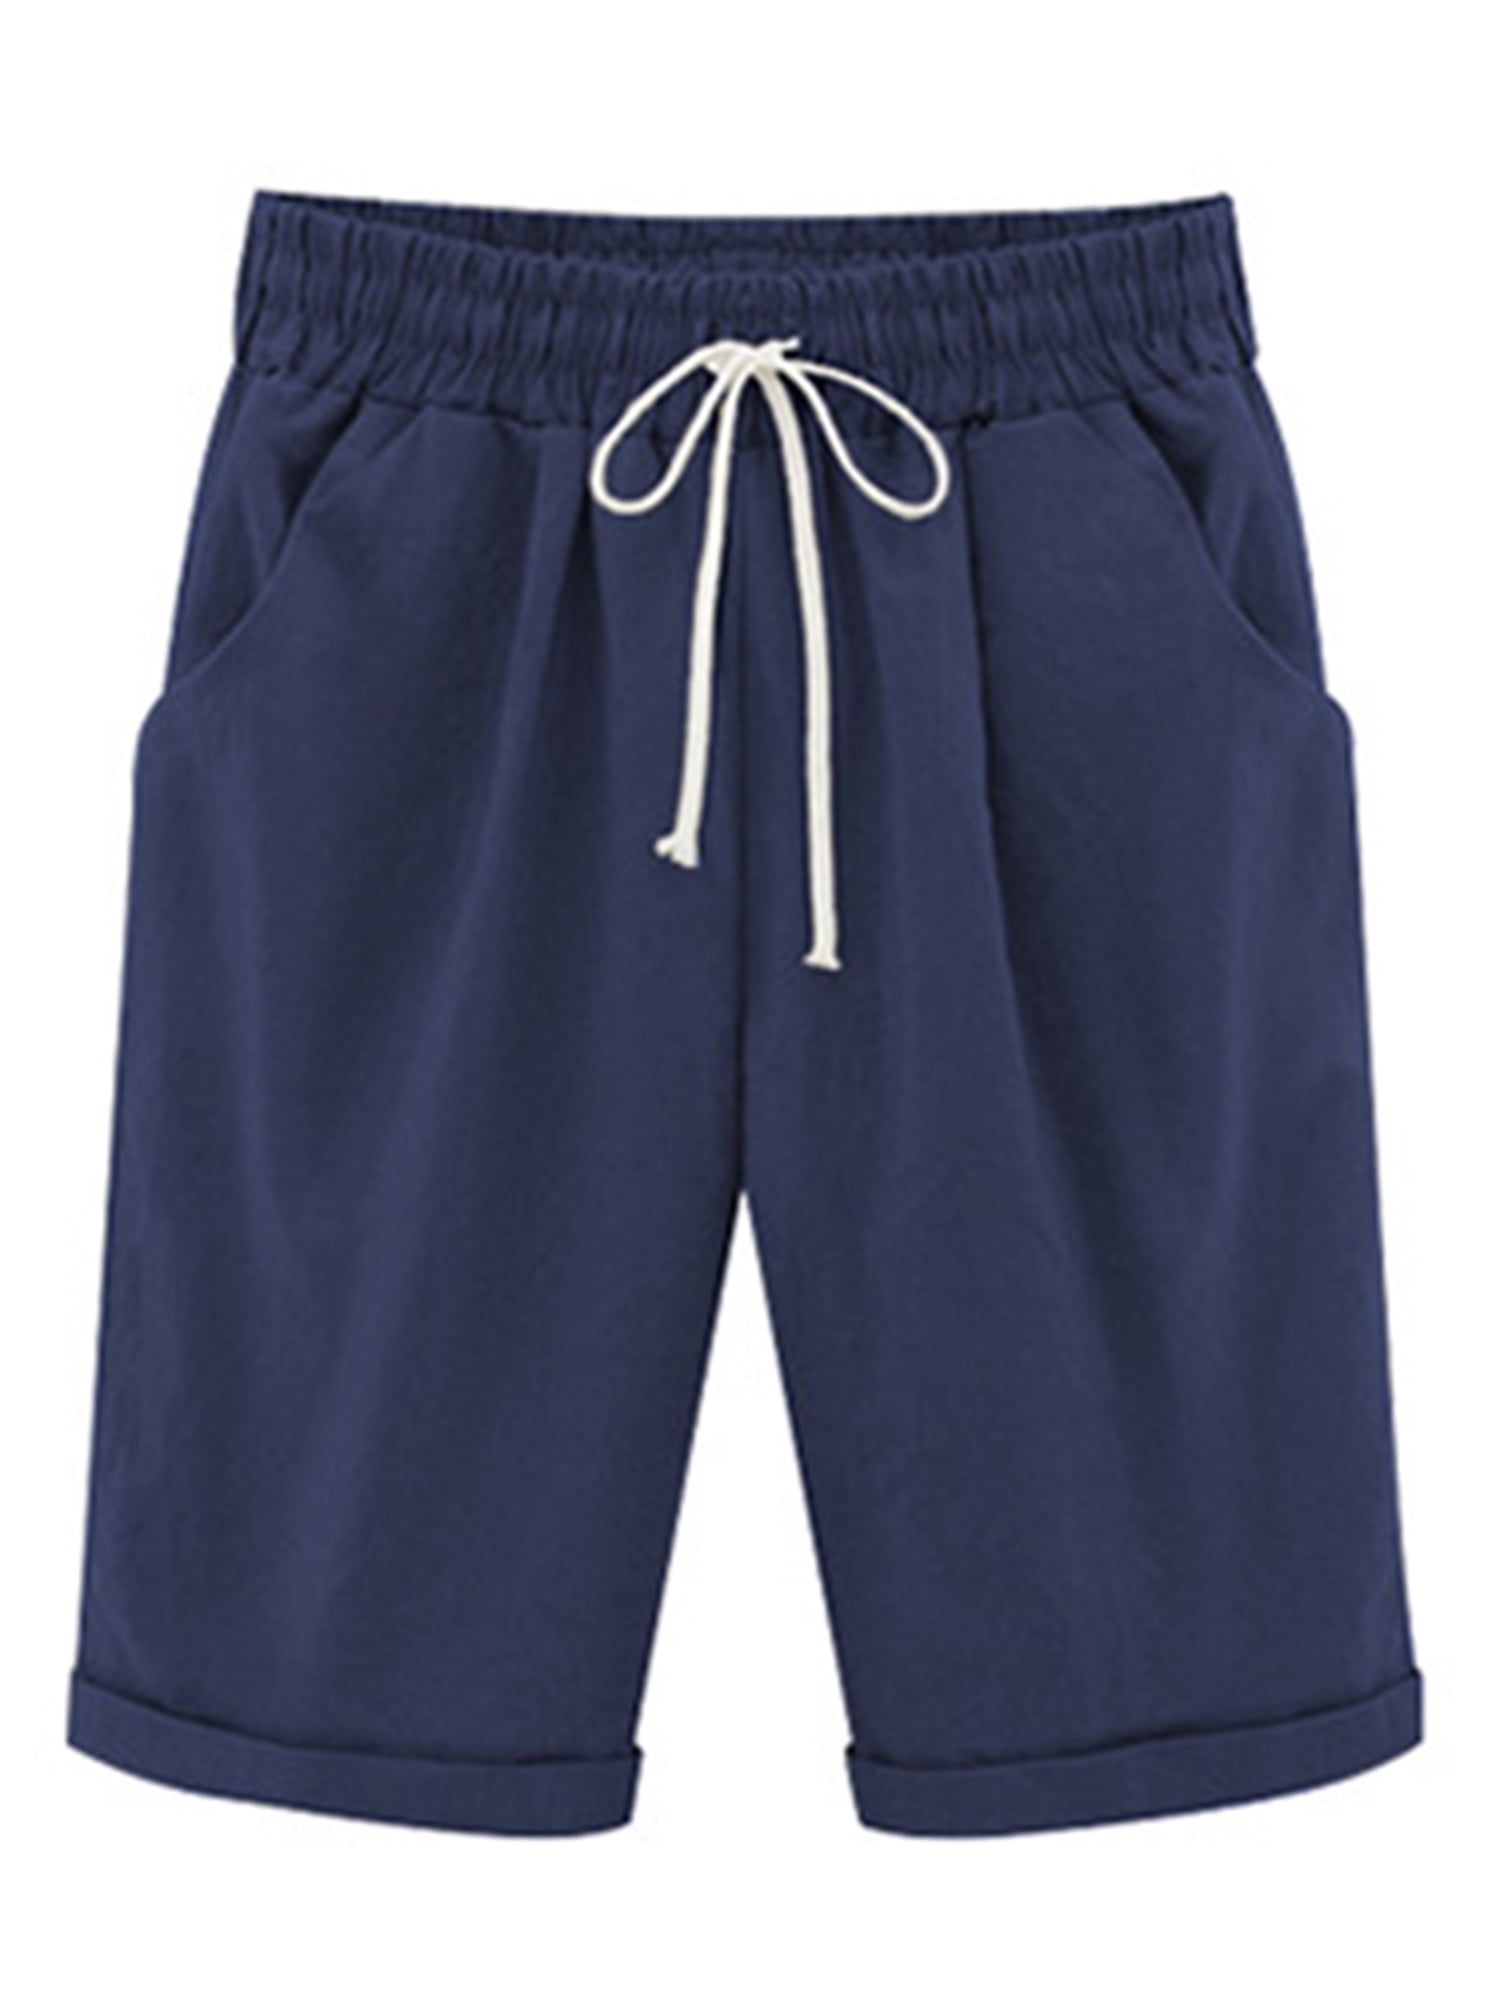 Lumento Women Drawstring Elastic Waist Summer Beach Shorts with Pockets ...